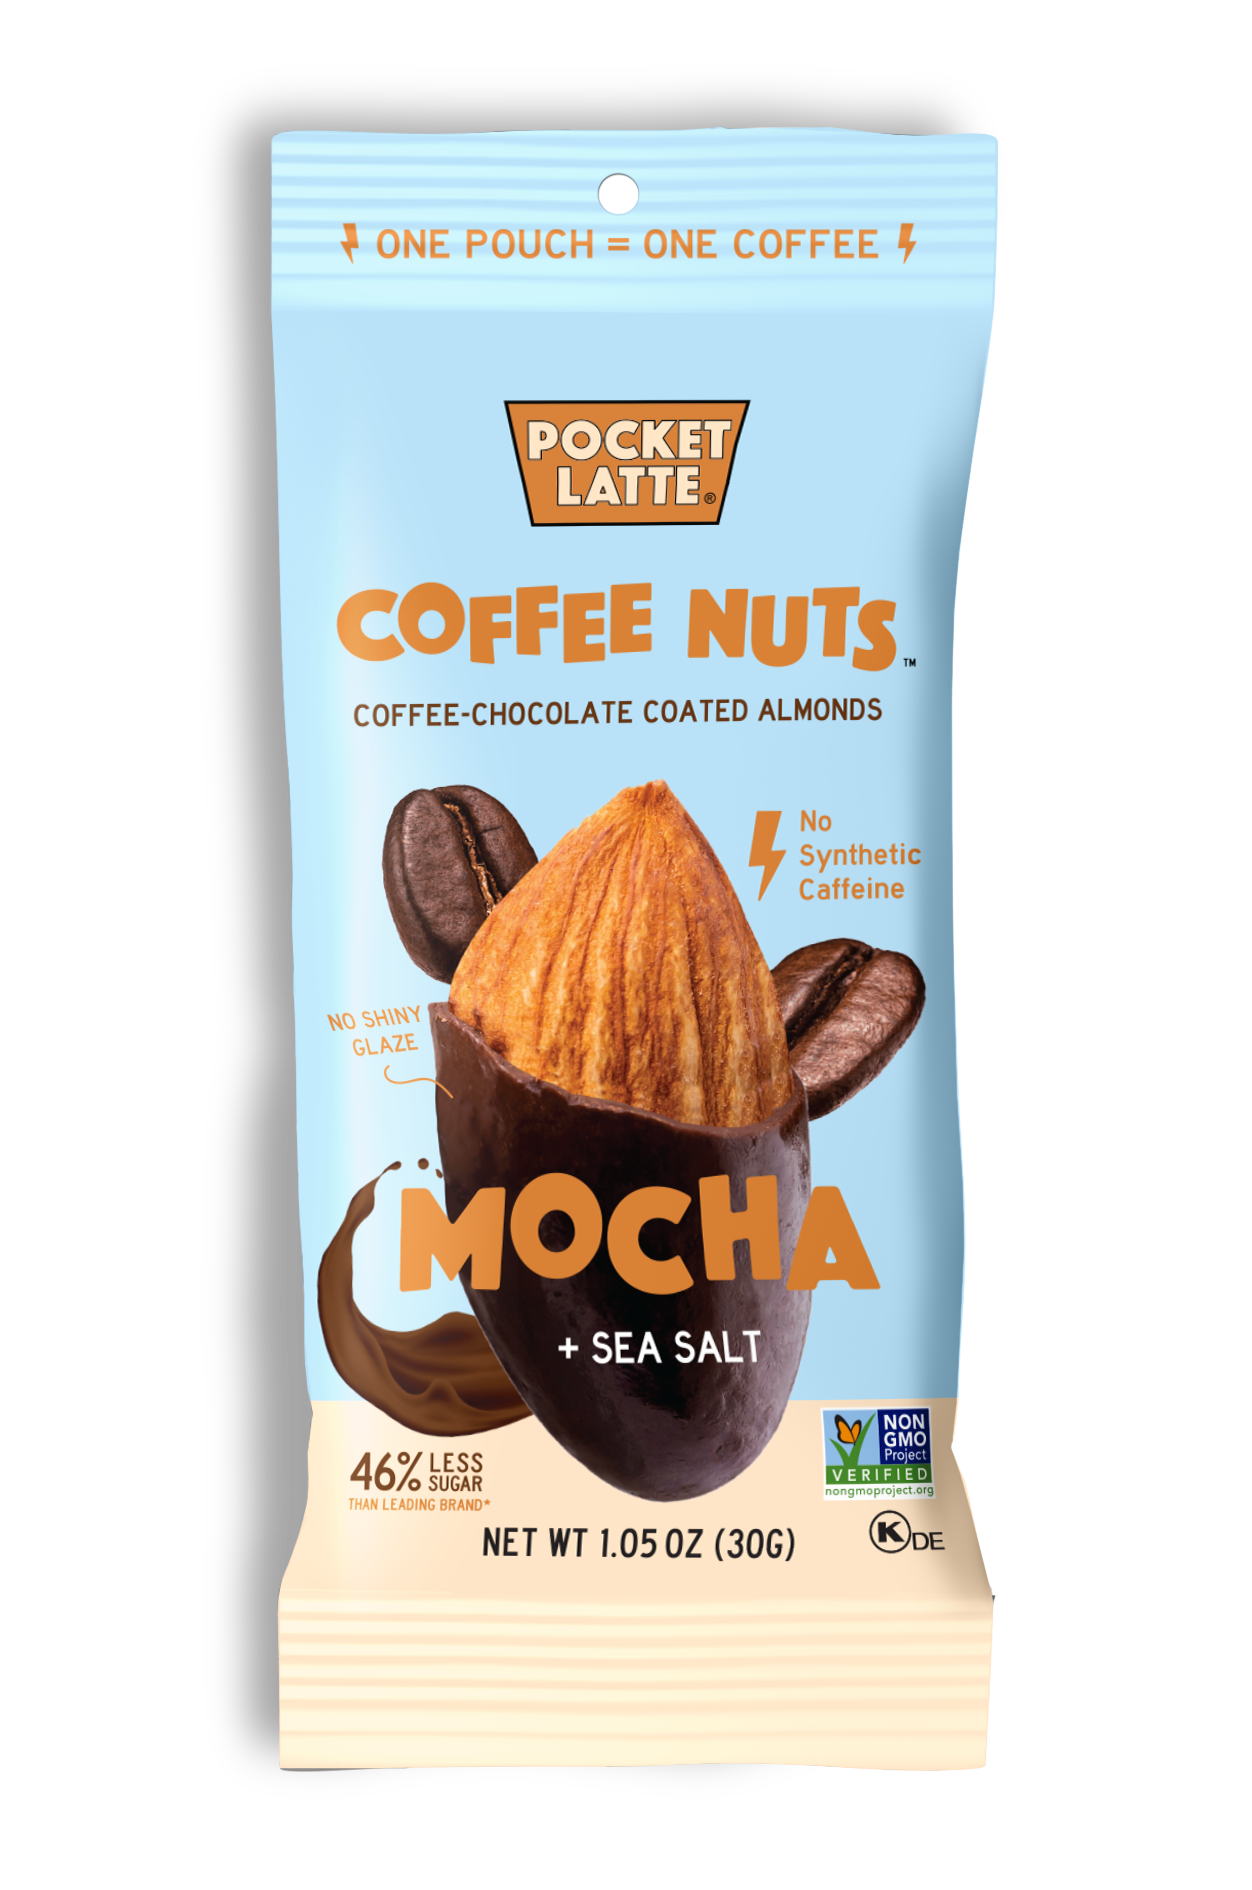 Pocket Latte "Mocha + Sea Salt" Coffee Nuts 72 units per case 1.1 oz